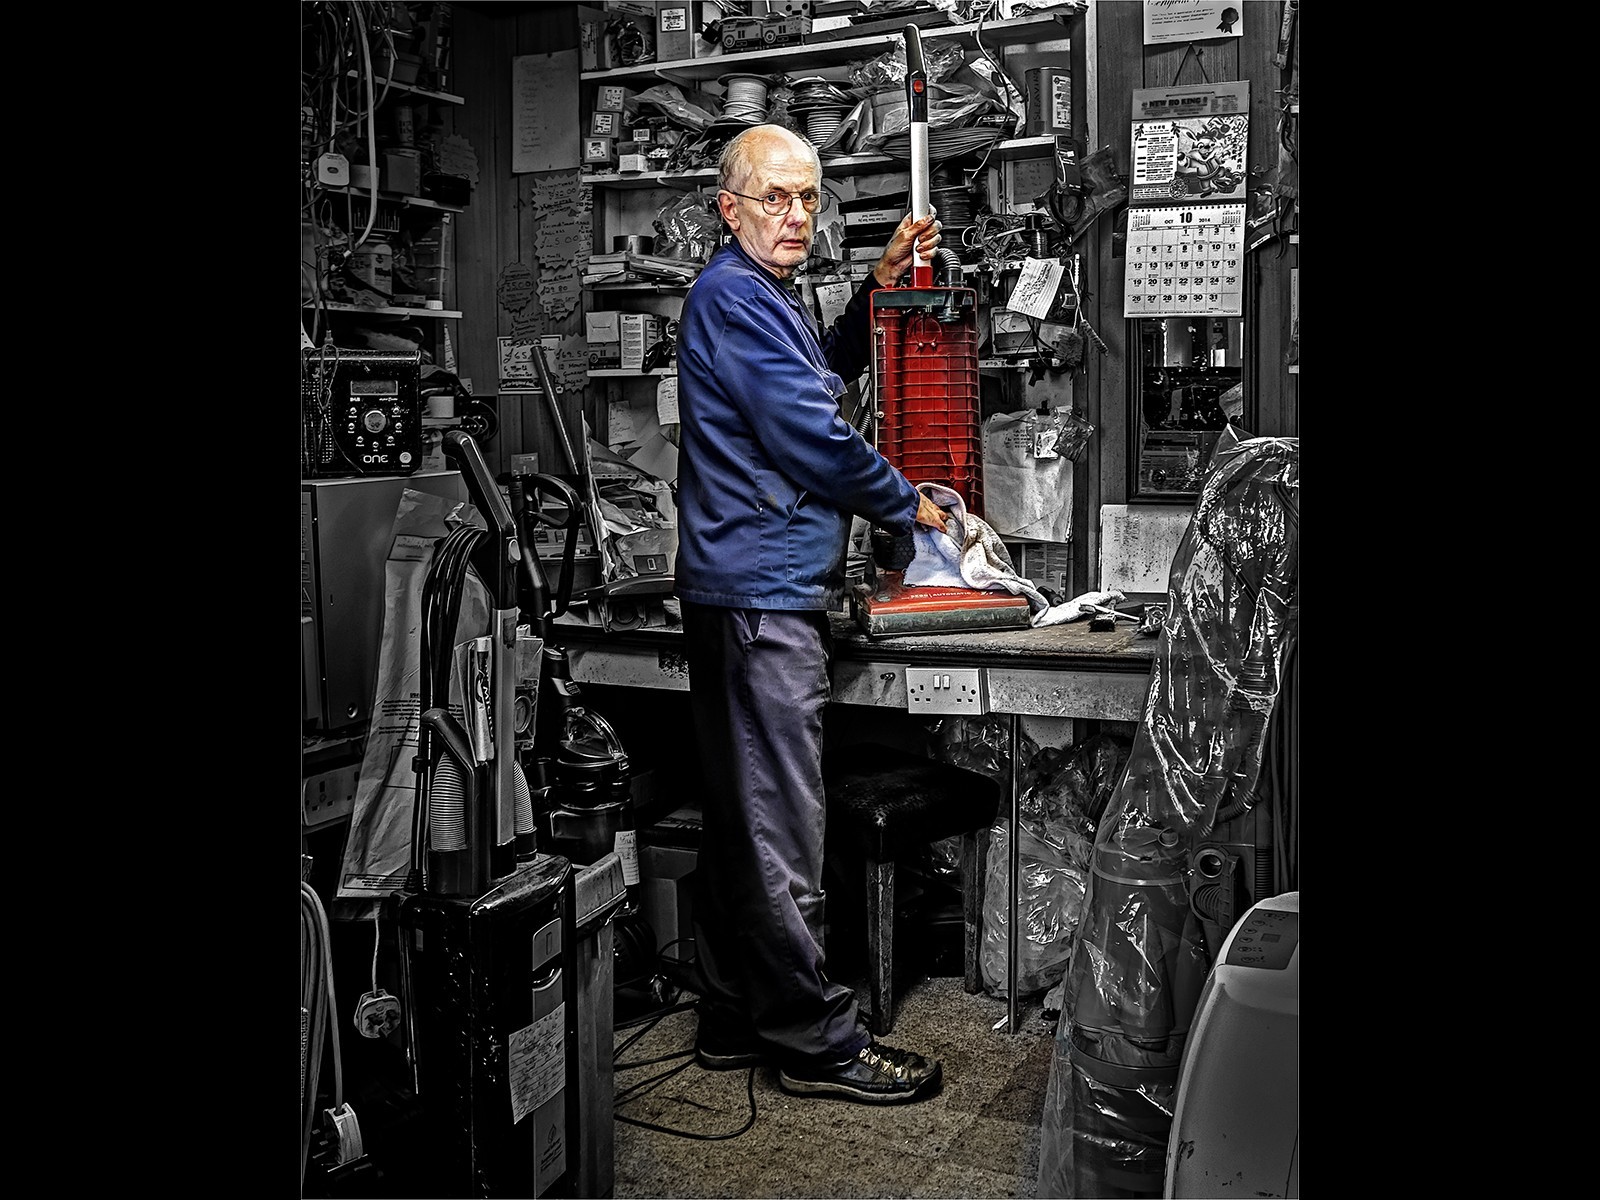 The vacum repair man in his workshop